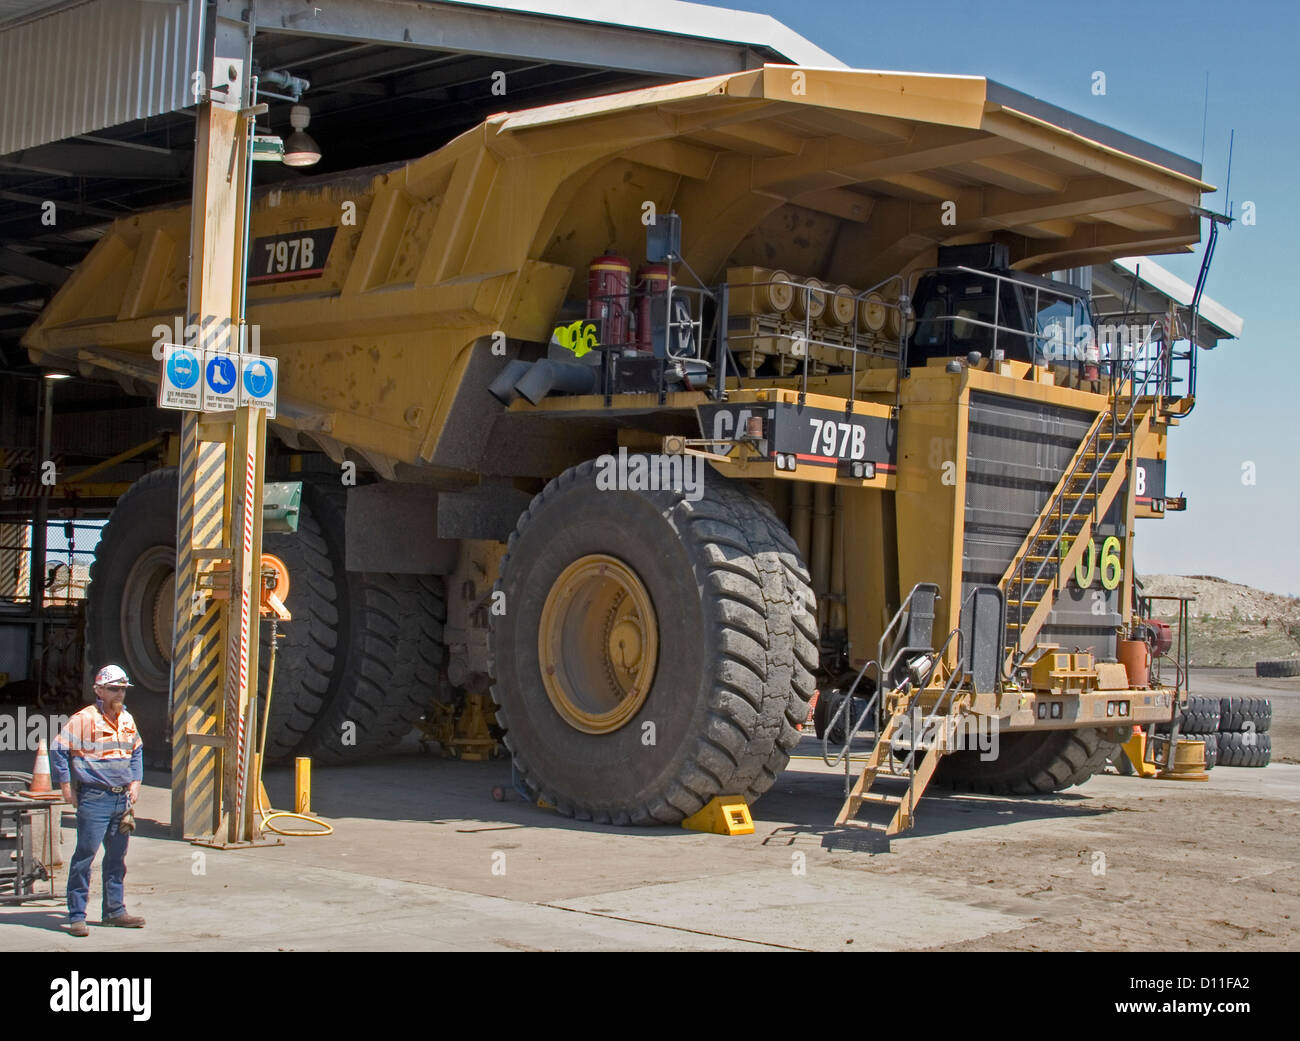 Mine worker / truck driver dwarfed by huge mining dump truck in workshop at open cut coal mine in central Queensland Australia Stock Photo